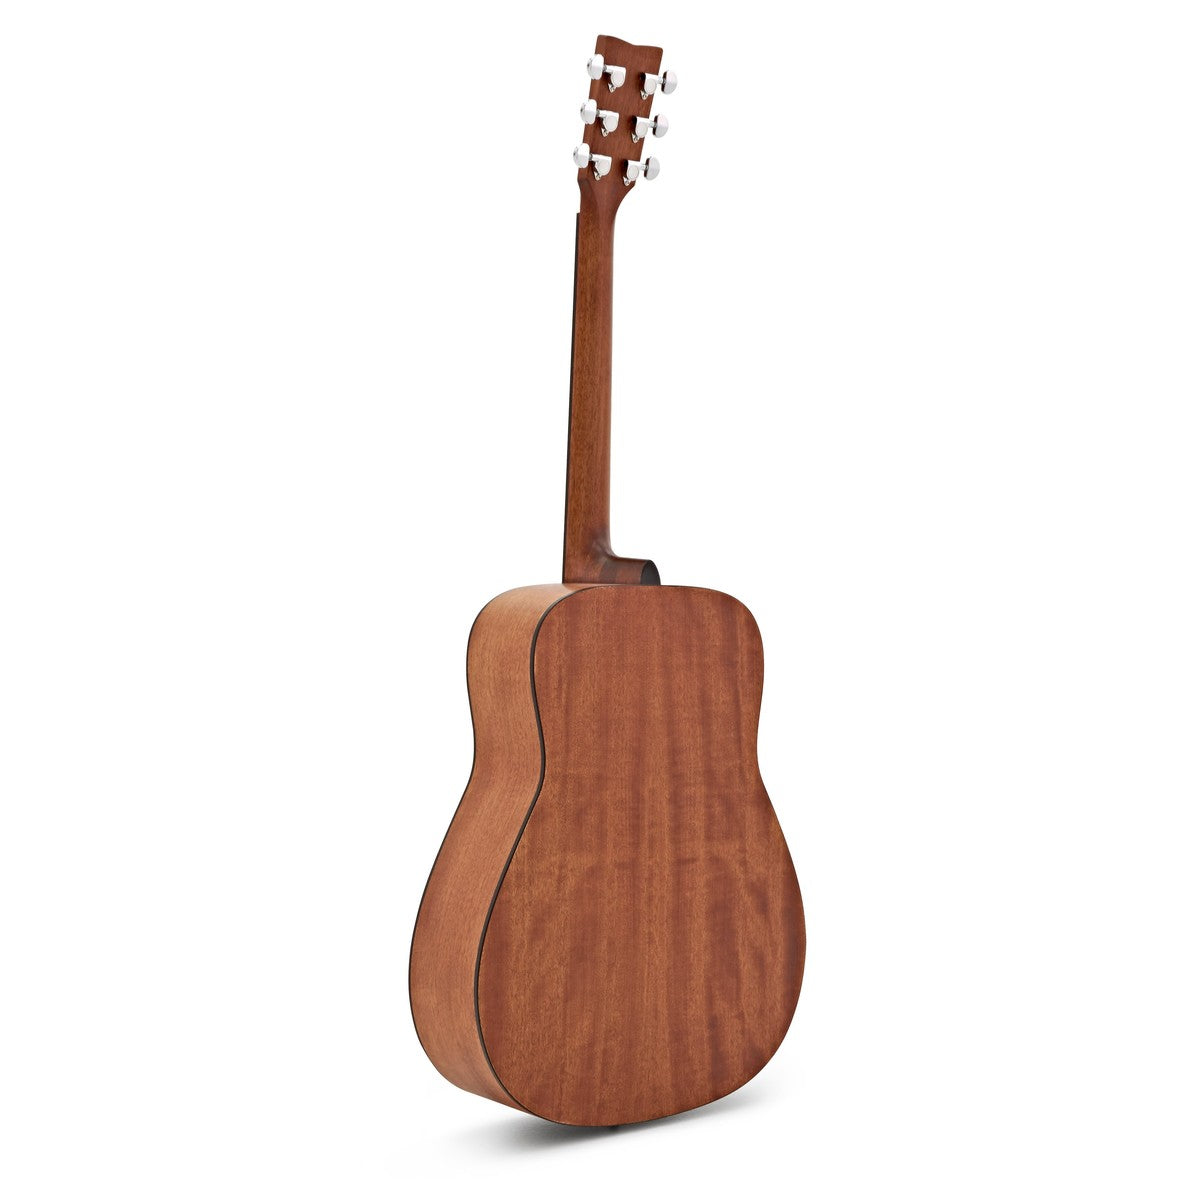 Đàn Guitar Yamaha FG800M Acoustic